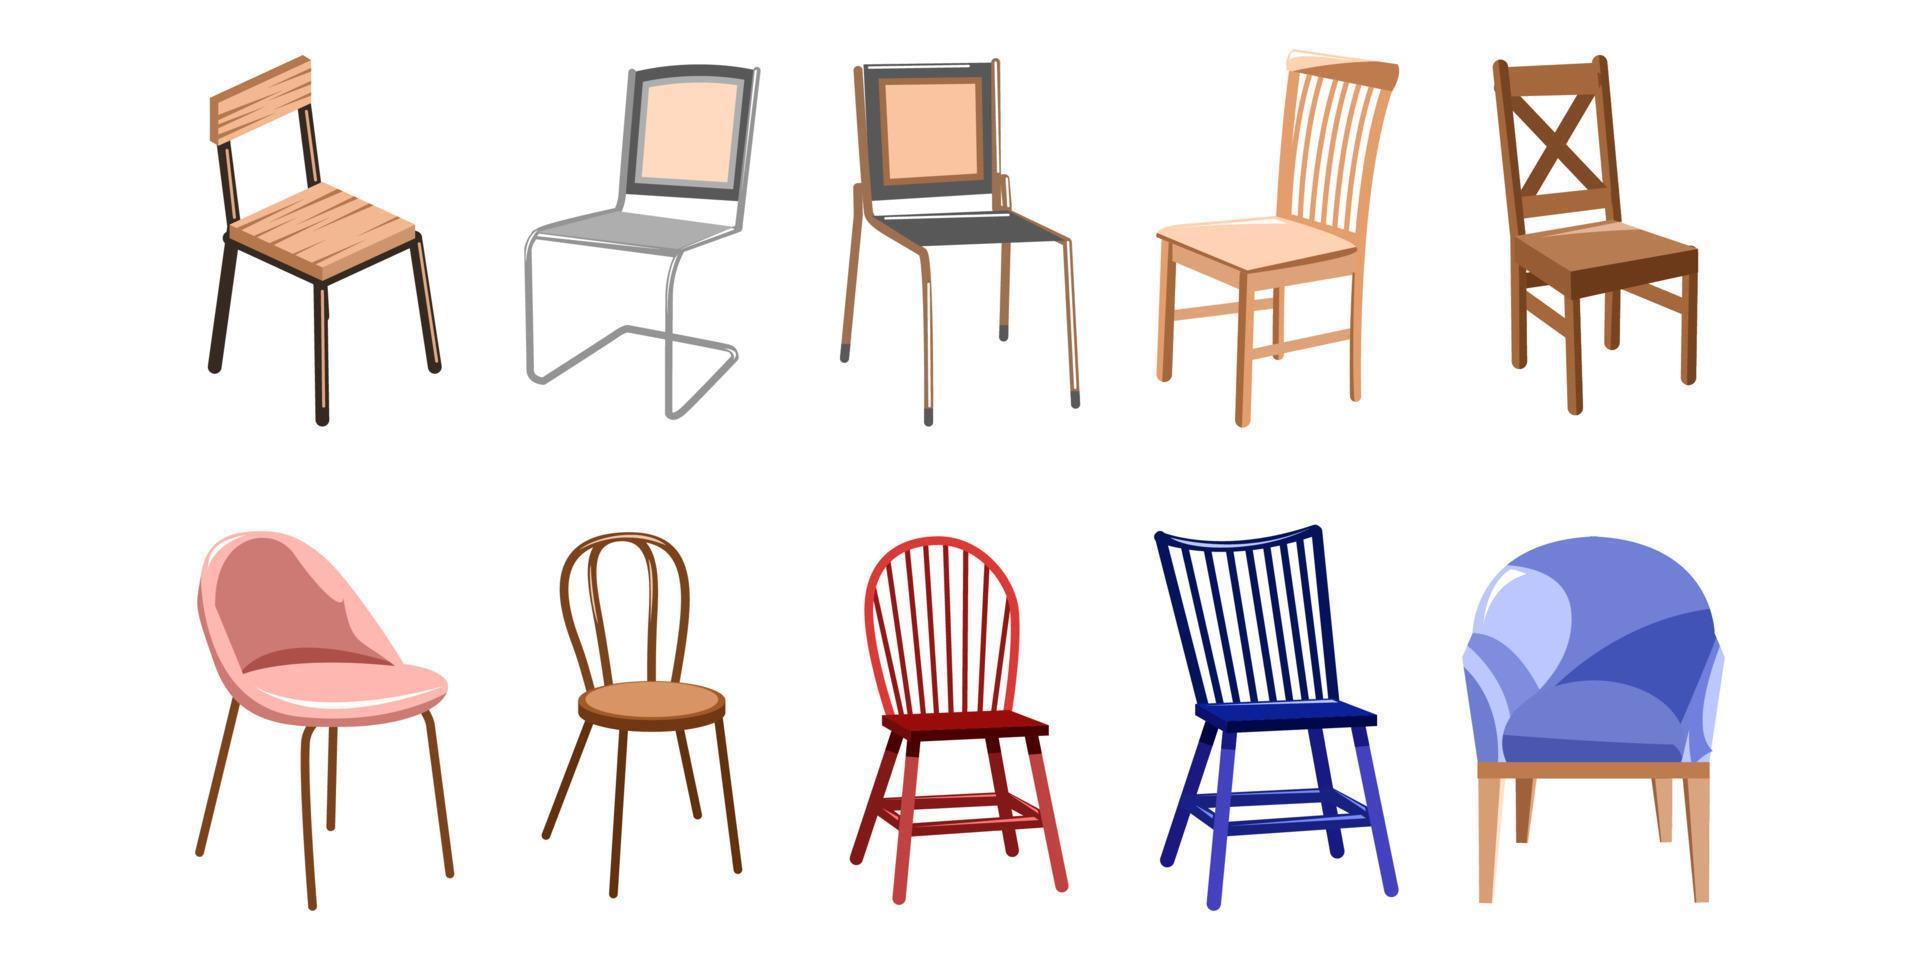 chair vector set collection graphic clipart design 22759885 Vector Art ...